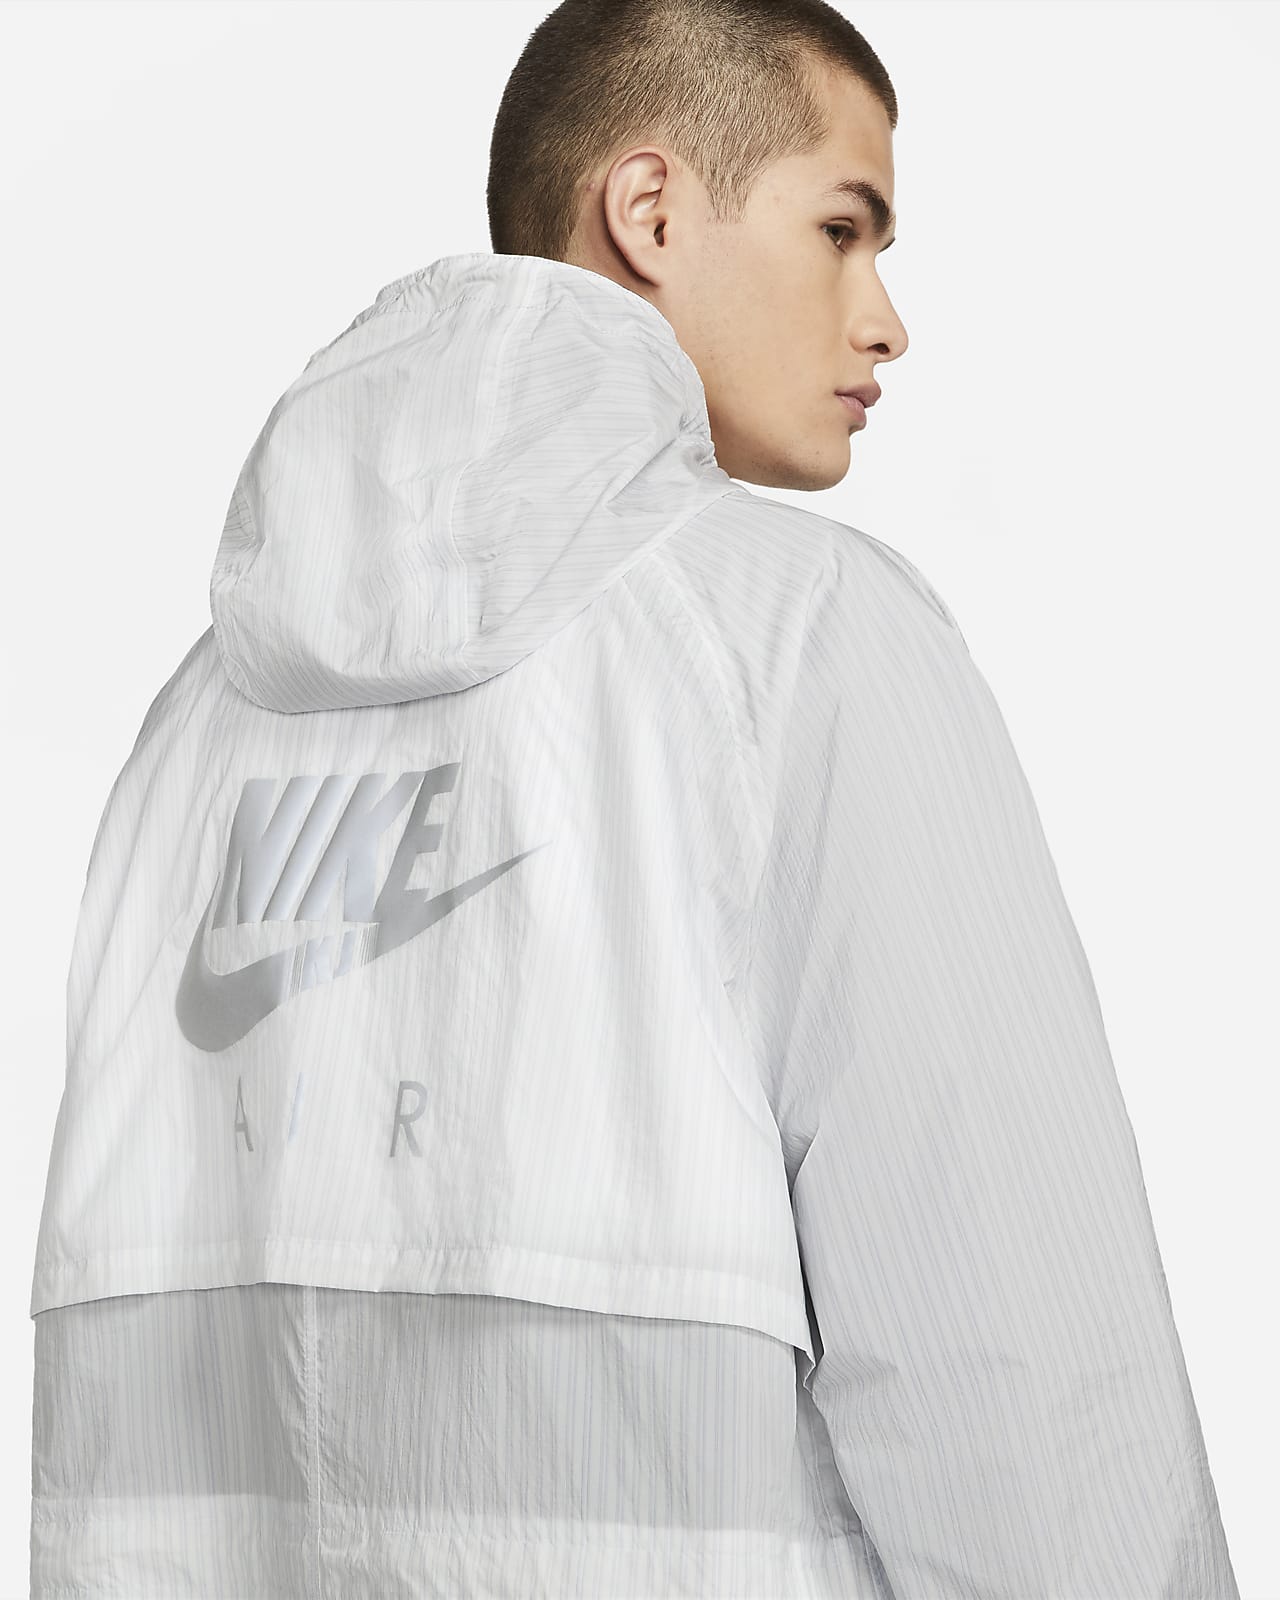 Nike公式 ナイキ X キム ジョーンズ リバーシブル パーカー オンラインストア 通販サイト